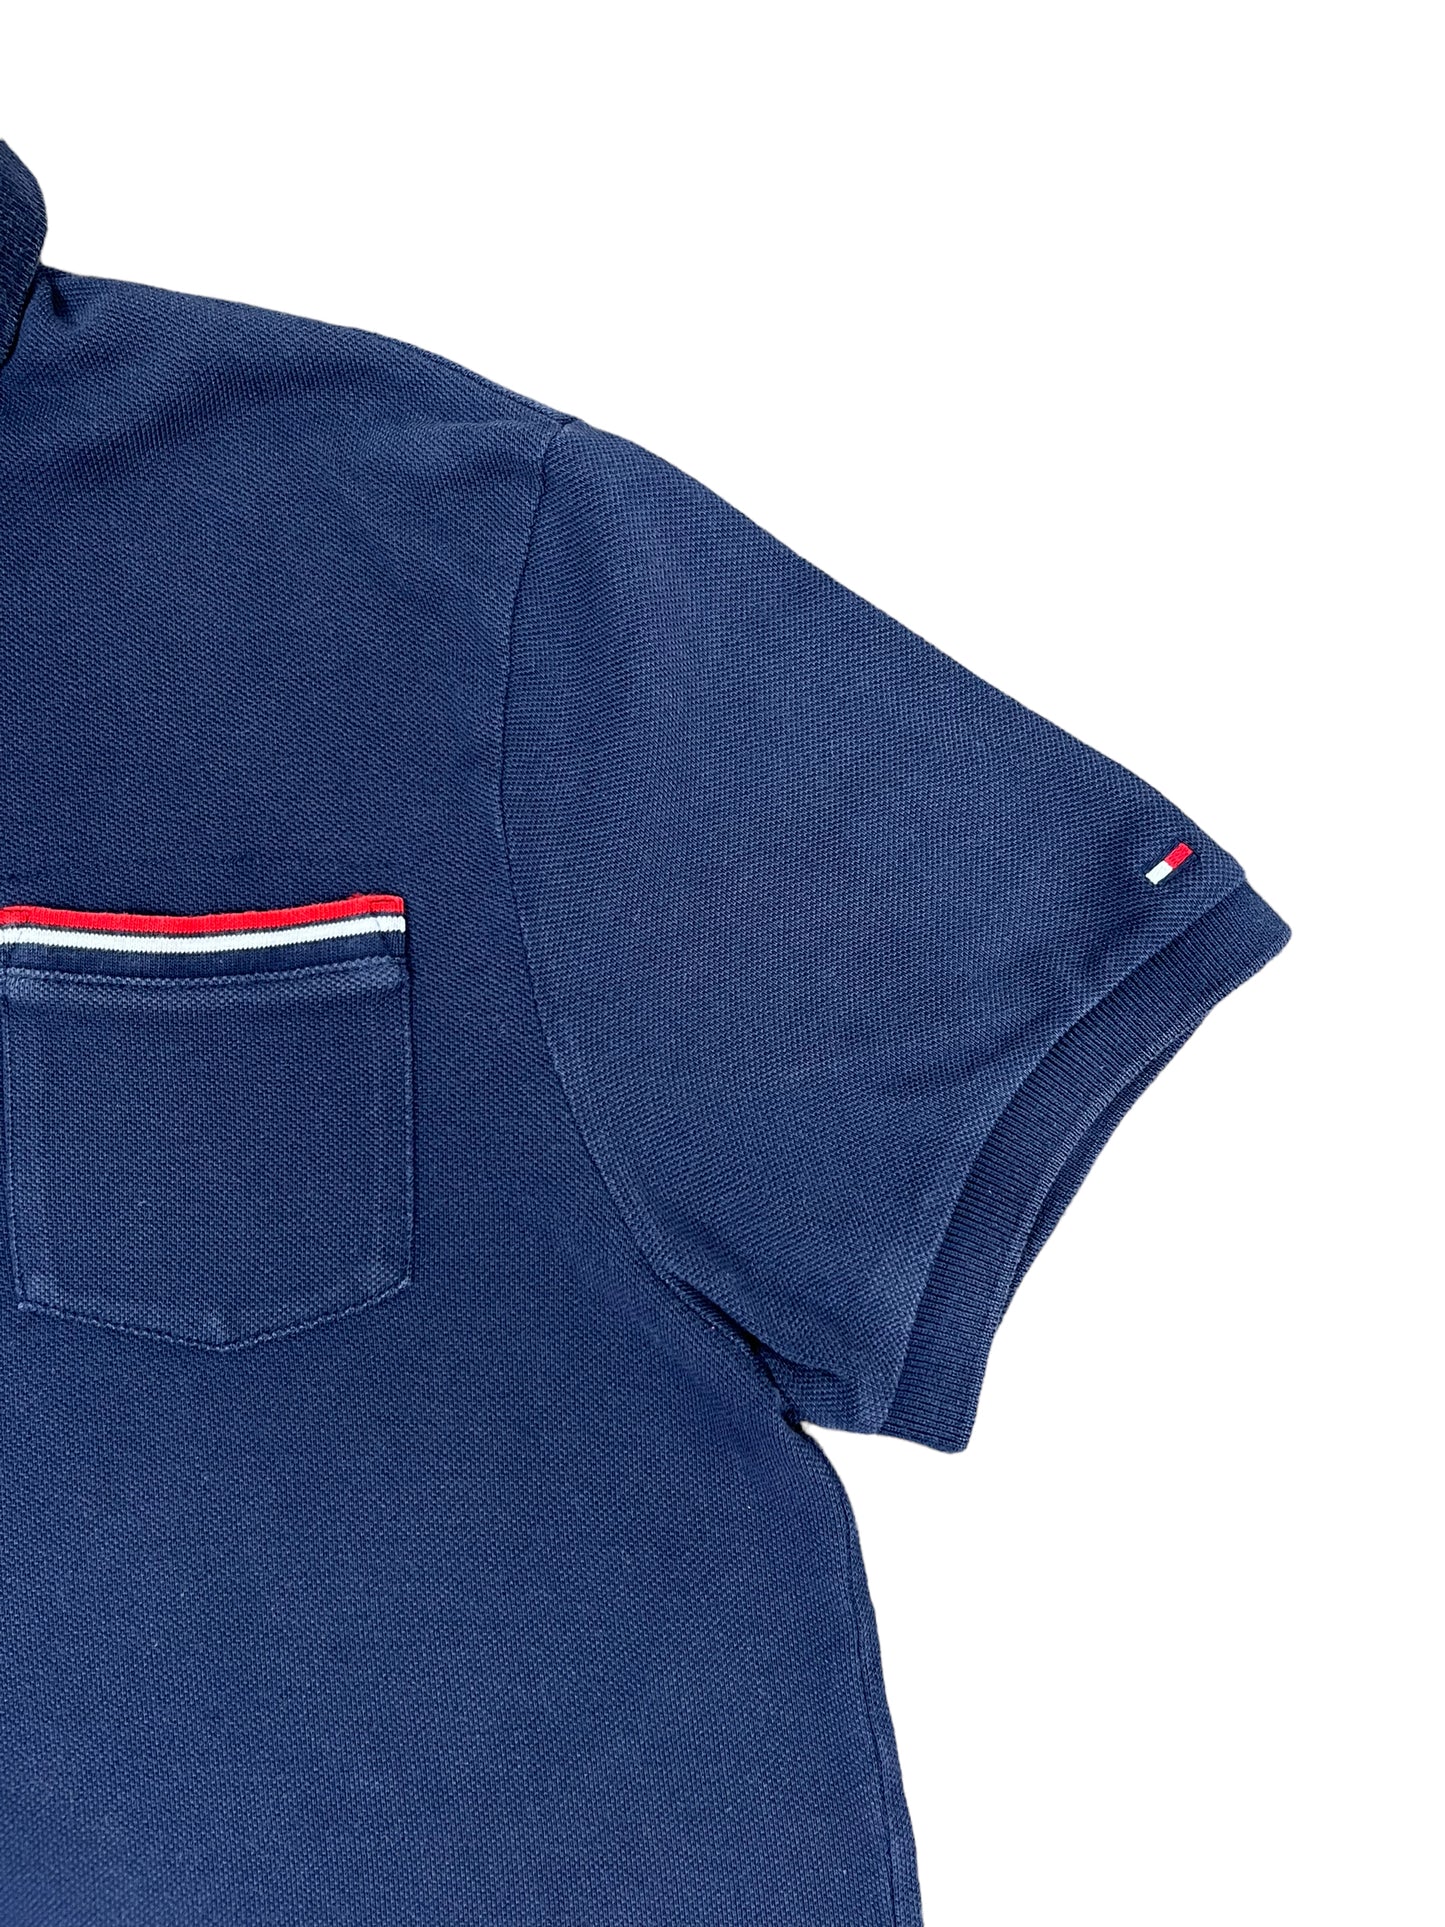 Vintage Tommy Hilfiger Cropped Polo Shirt - Medium